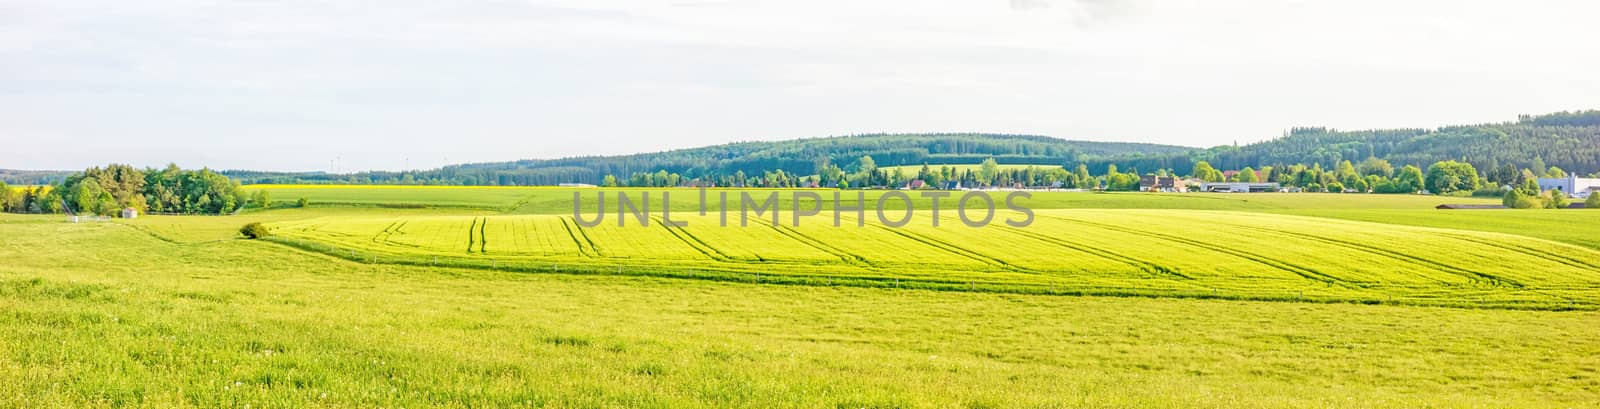 Farmland panorama - wheat field by aldorado